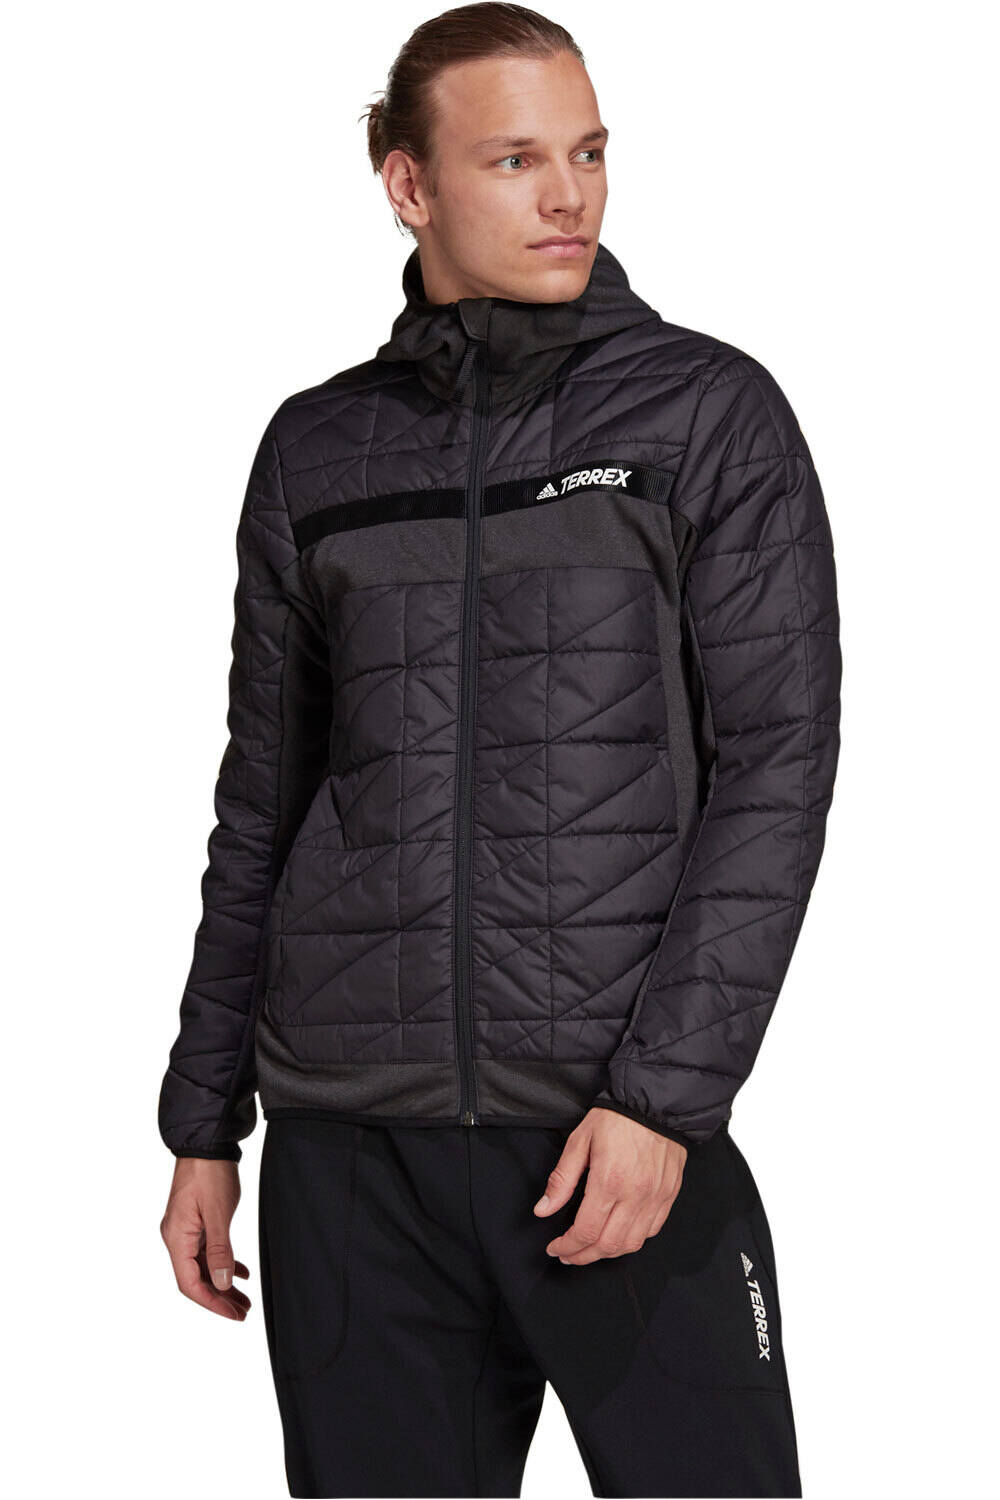 adidas chaqueta outdoor hombre Terrex Multi Primegreen Hybrid Insulated vista frontal